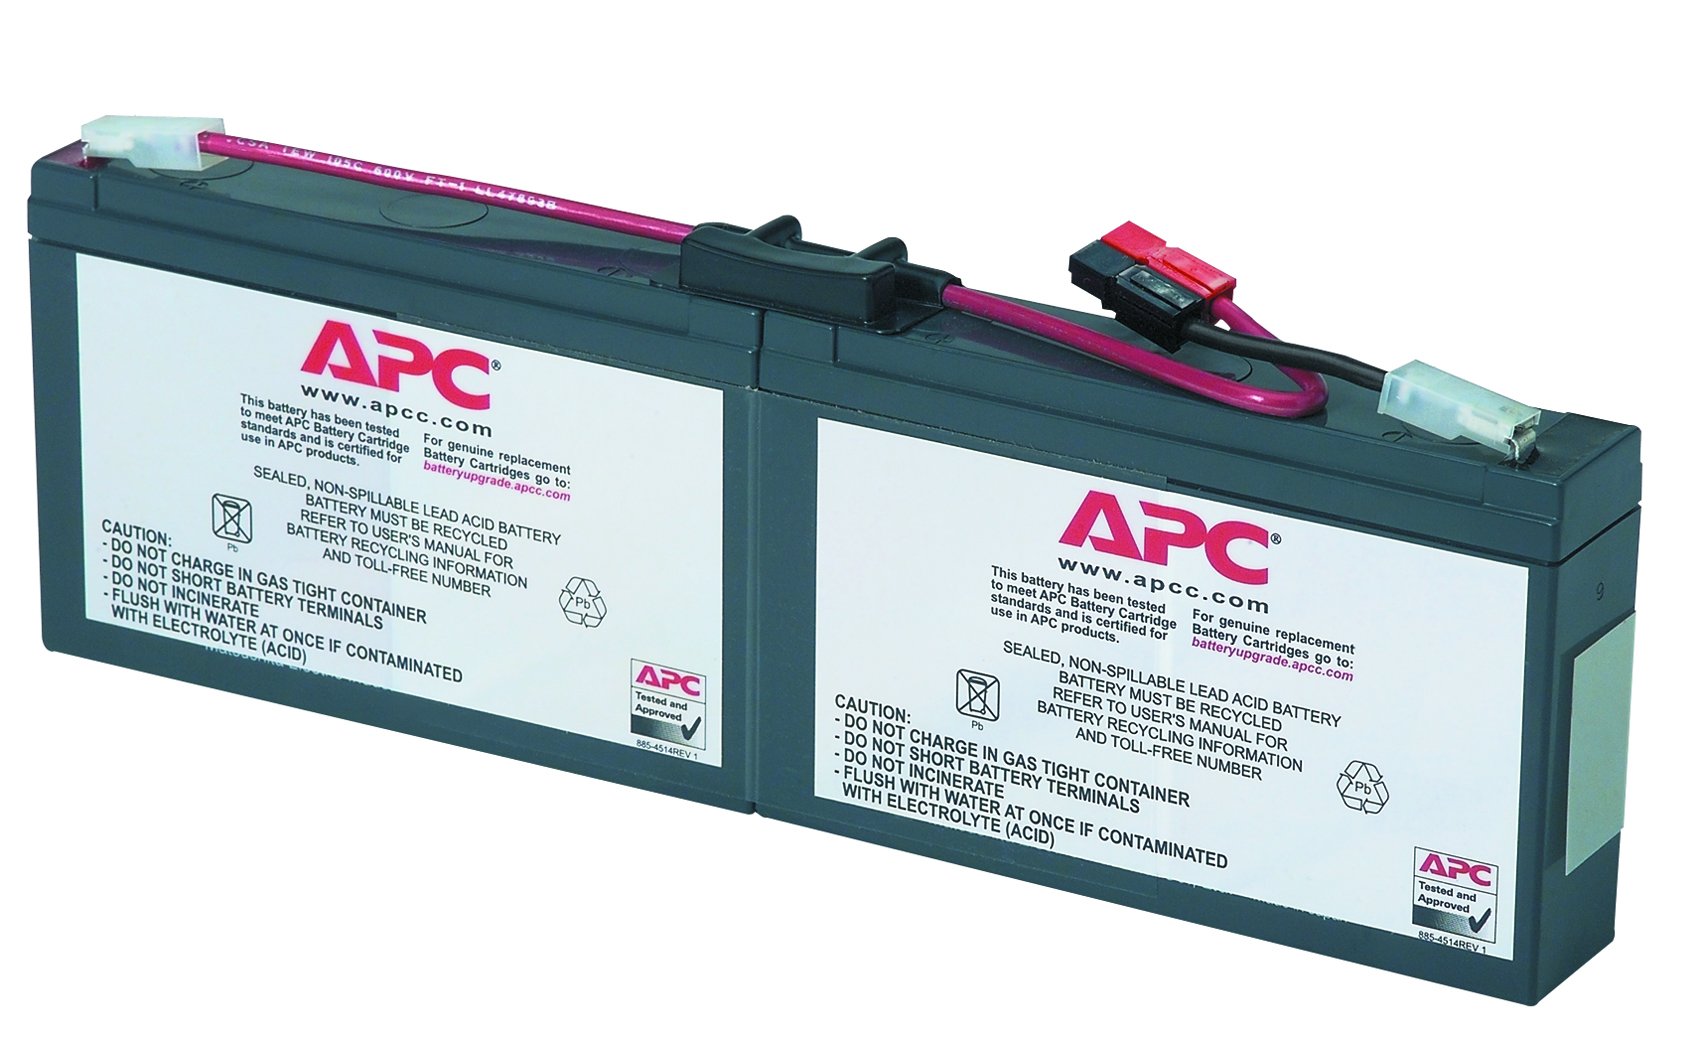 Apc batteries. Smart ups SC 450 аккумуляторы. Аккумуляторная батарея APC rbc5. APC аккумуляторы для ИБП. Батарея для ИБП APC rbc18.